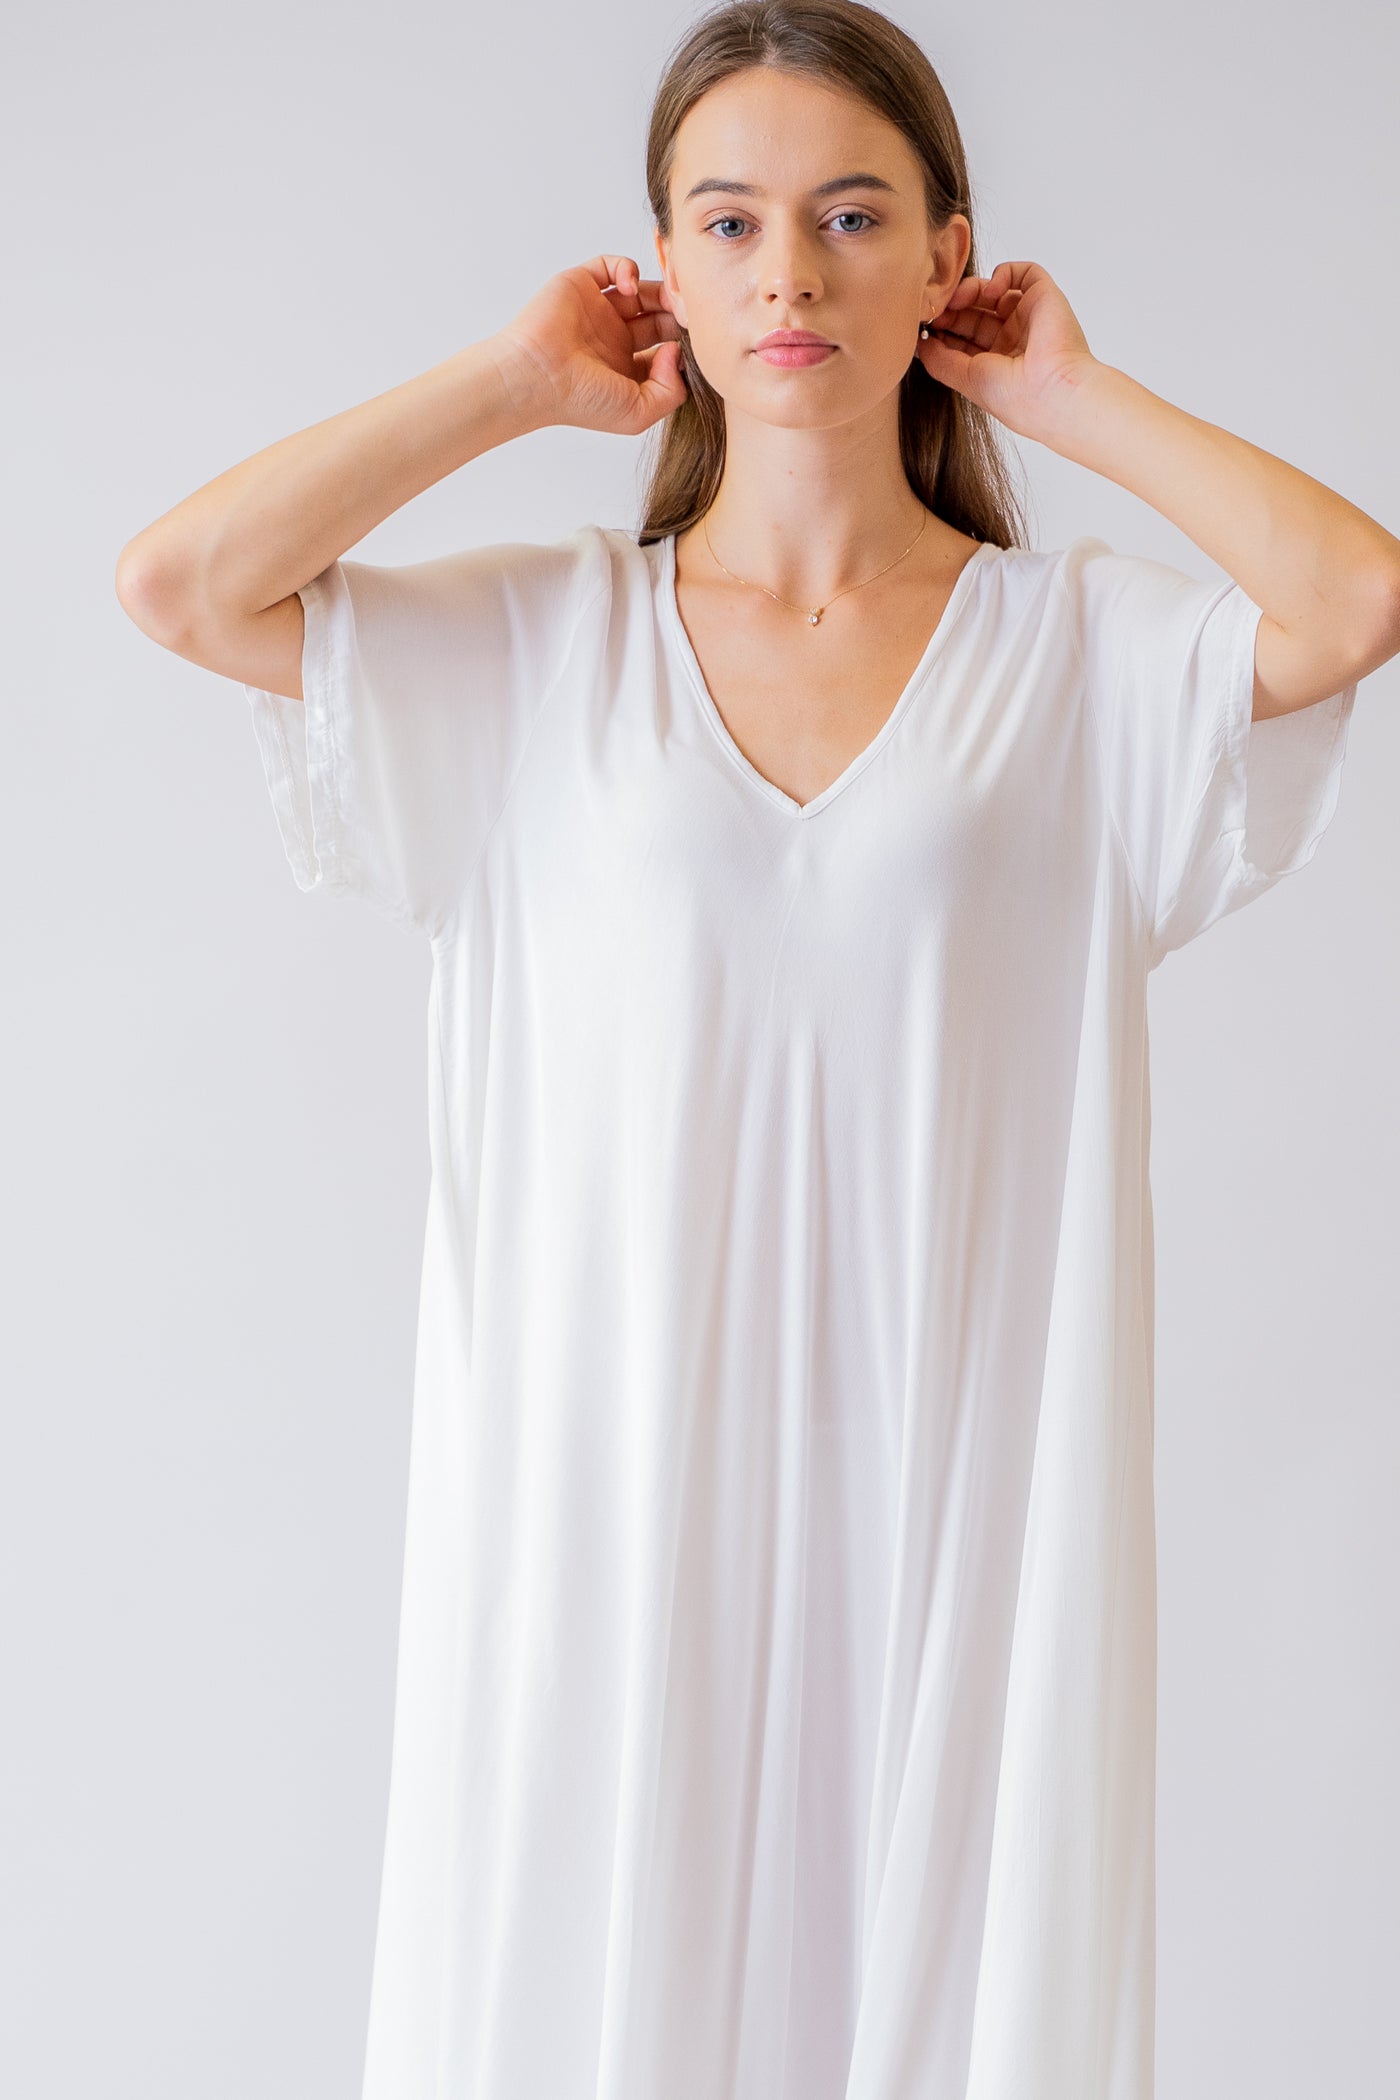 Biele vzdušné šaty Gotta - UNI - Šaty